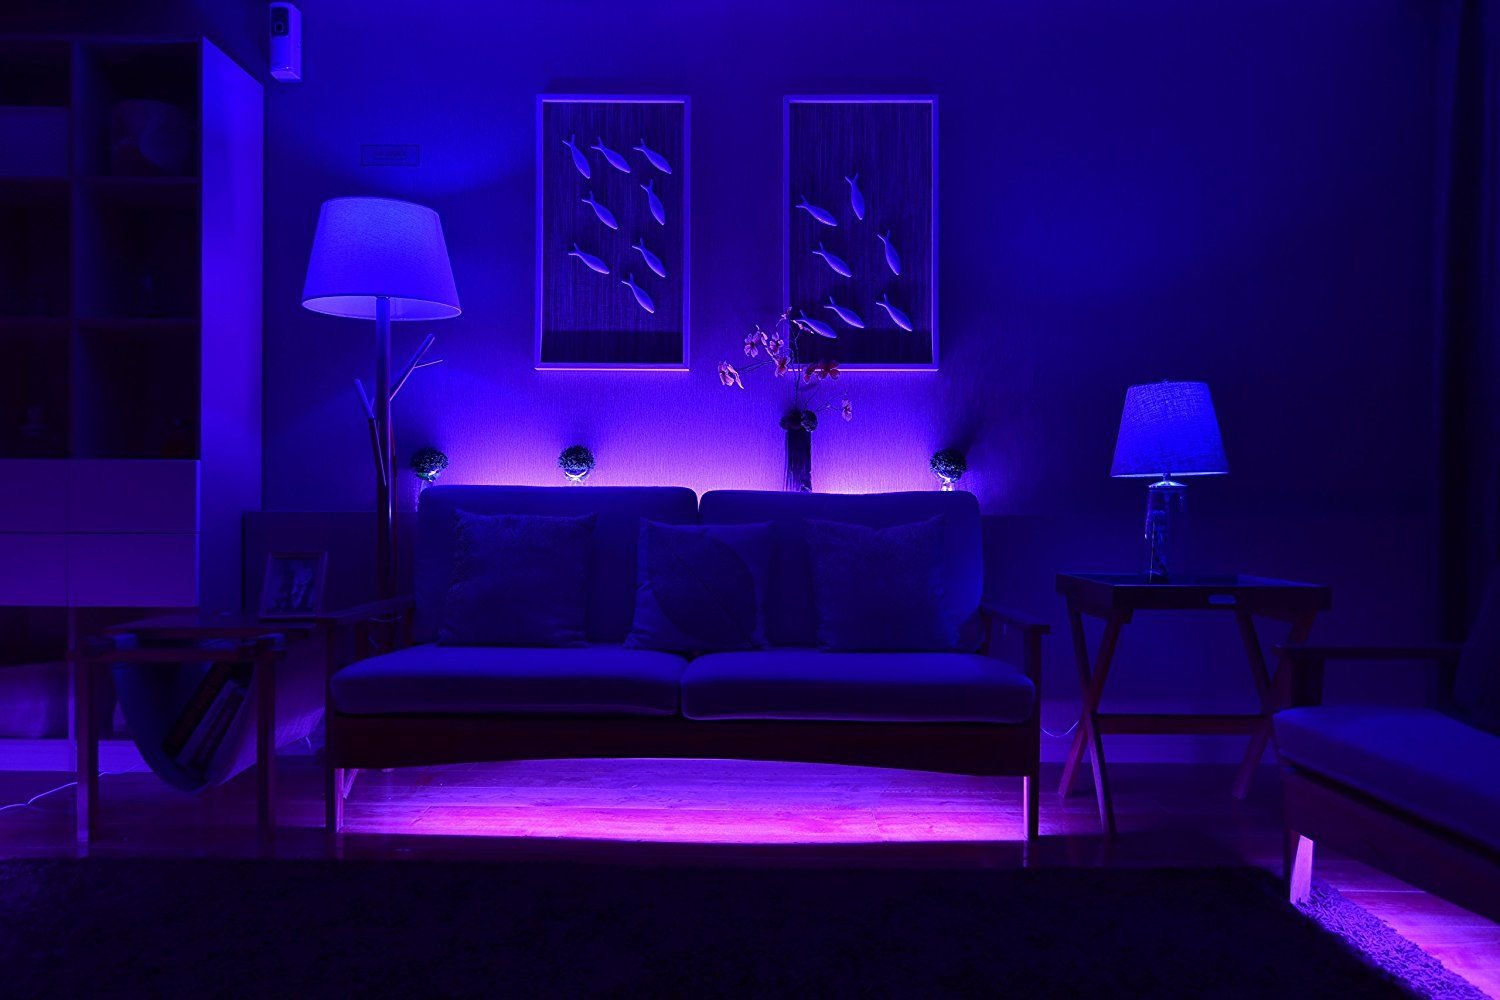 Day night light. Светодиодная лента Mijia Ambient Light strip. Фиолетовая РГБ подсветка. Комната с подсветкой. Неоновое освещение в комнате.